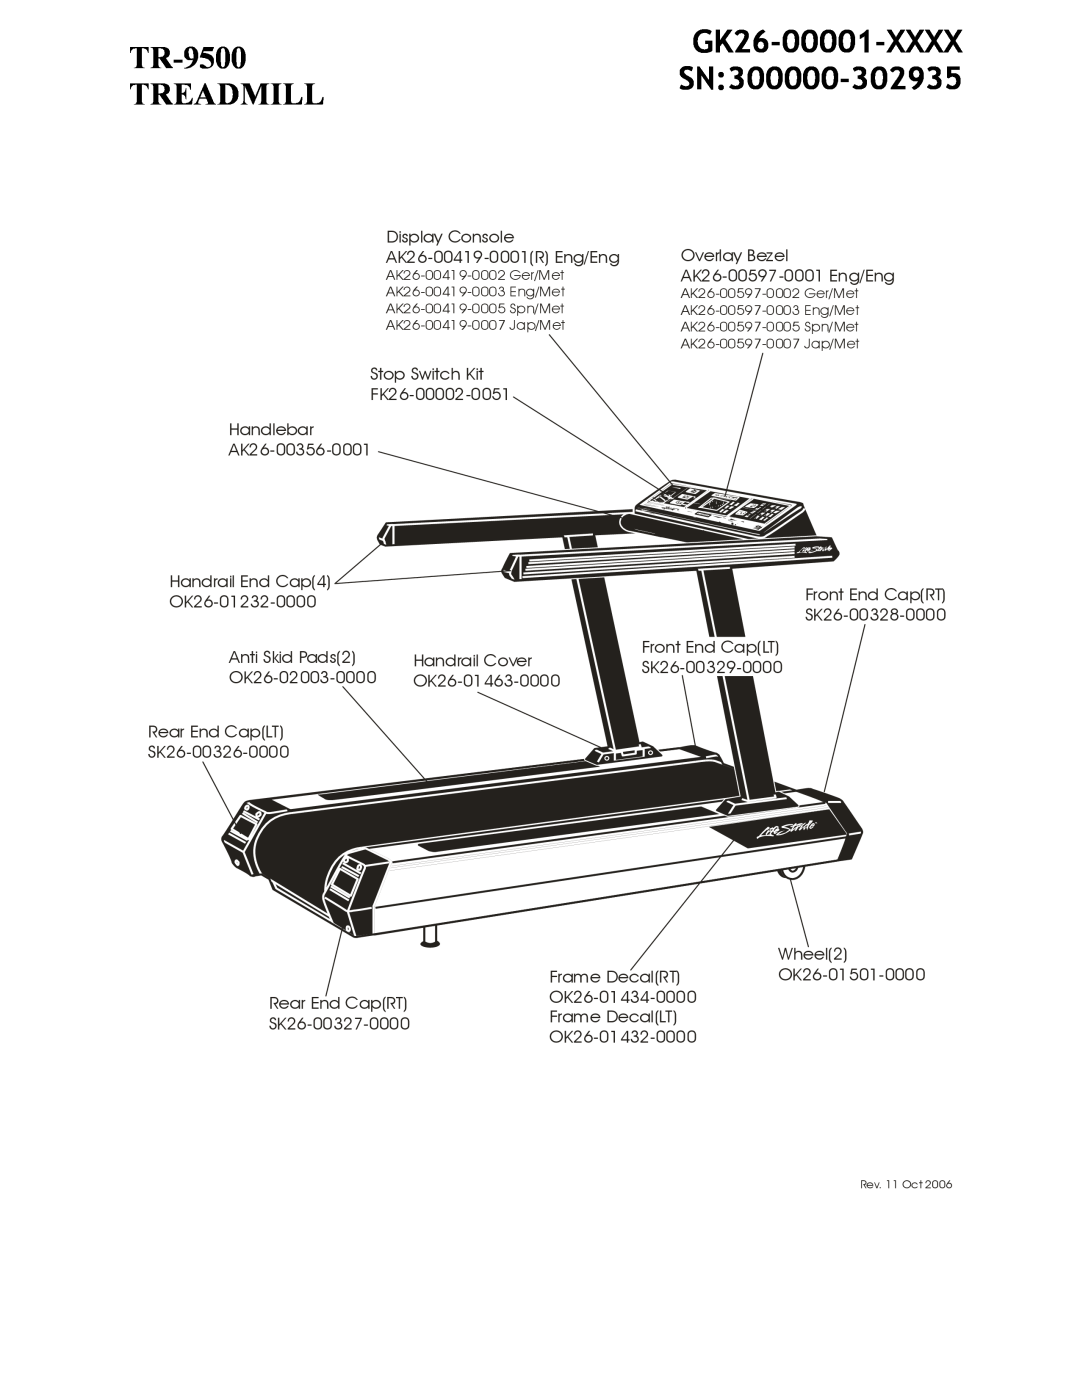 Life Fitness TR-9500 manual GK26-00001-XXXX, SN300000-302935, Treadmill 